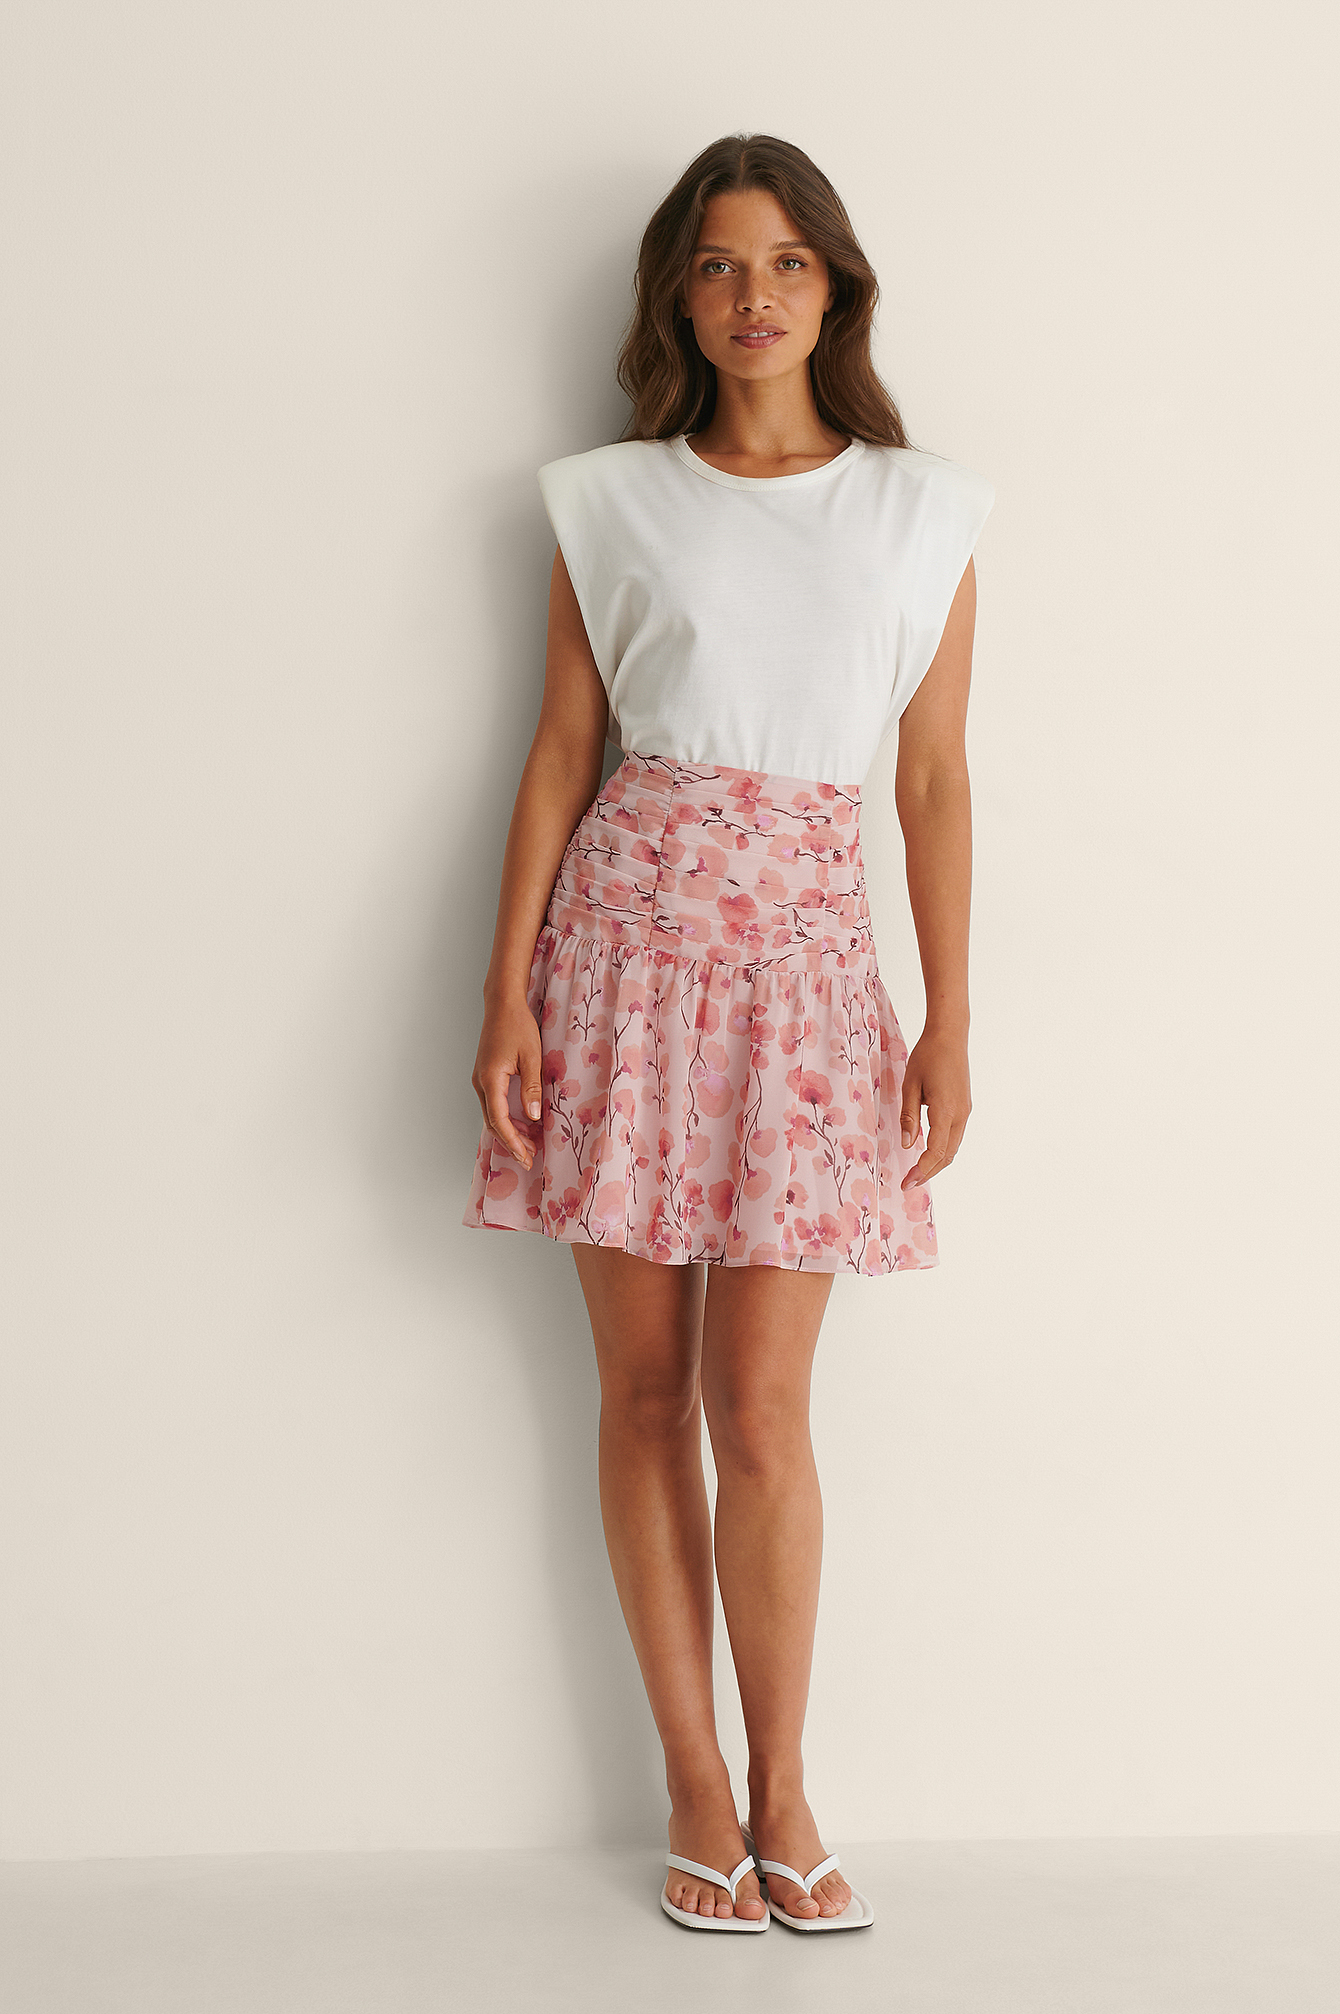 Drawstring Mini Skirt Outfit.